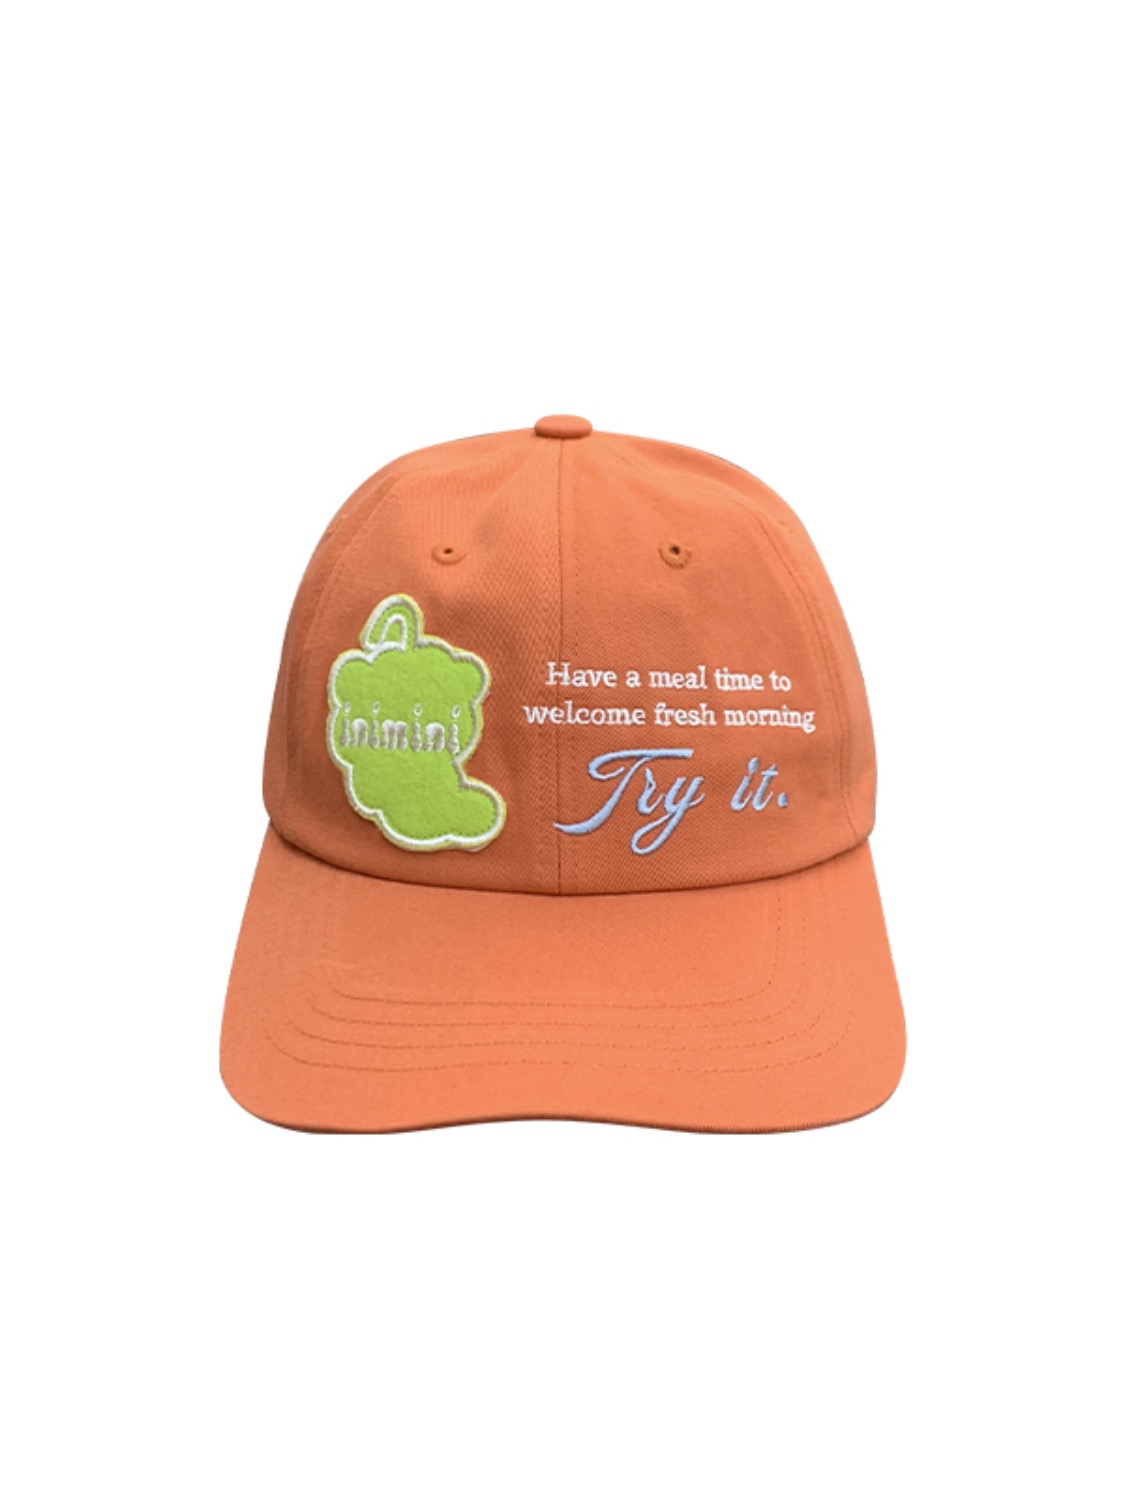 try it cap (orange)